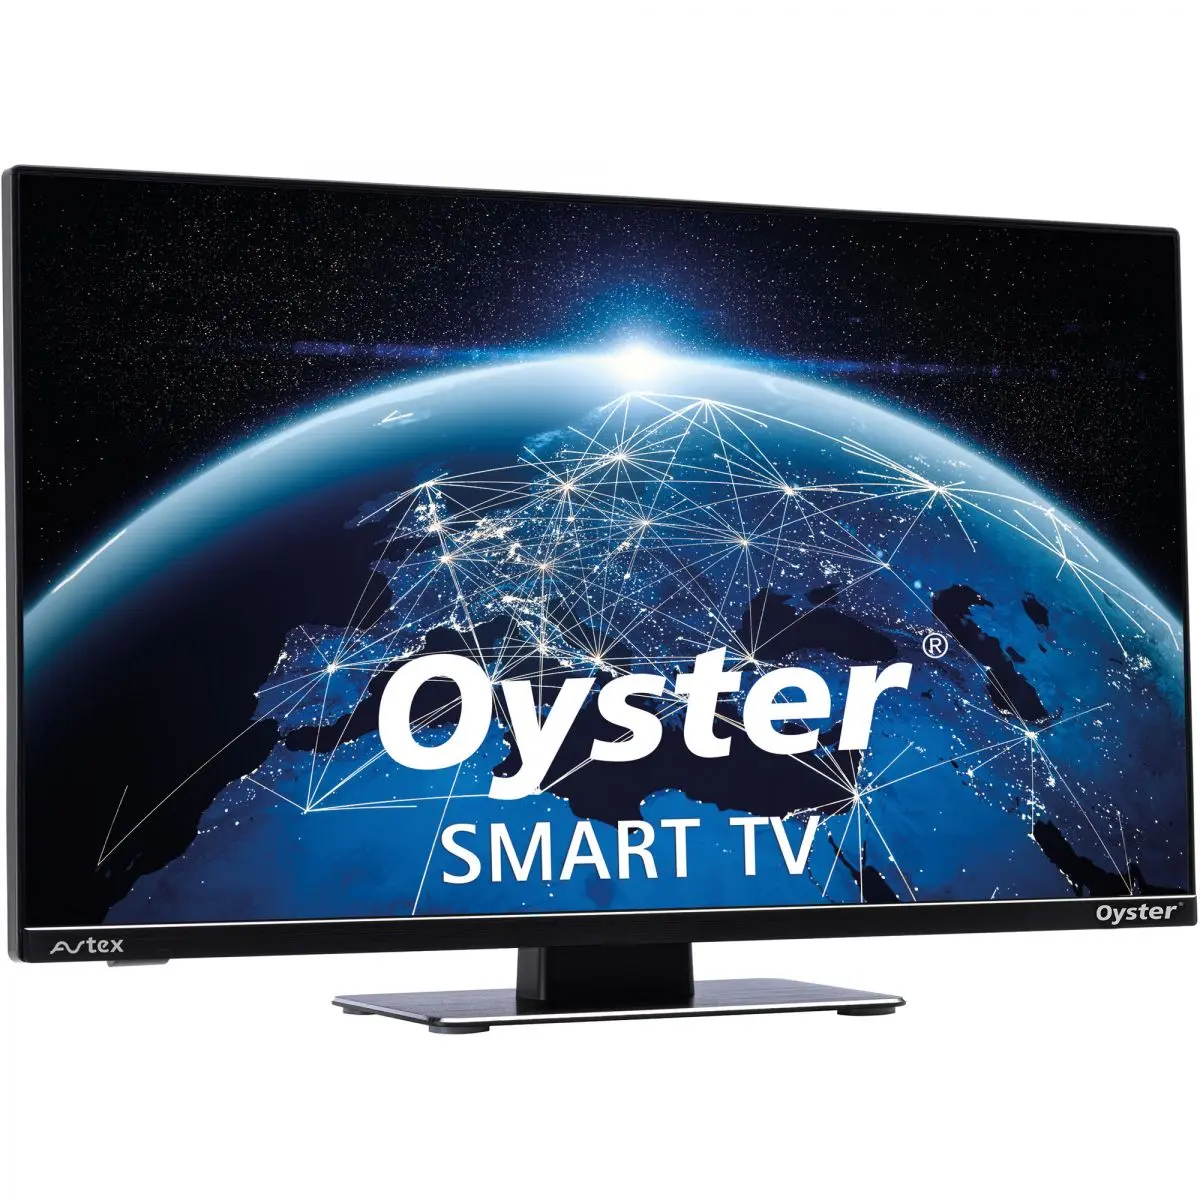 Smart TV Oyster 21,5, 12 volți